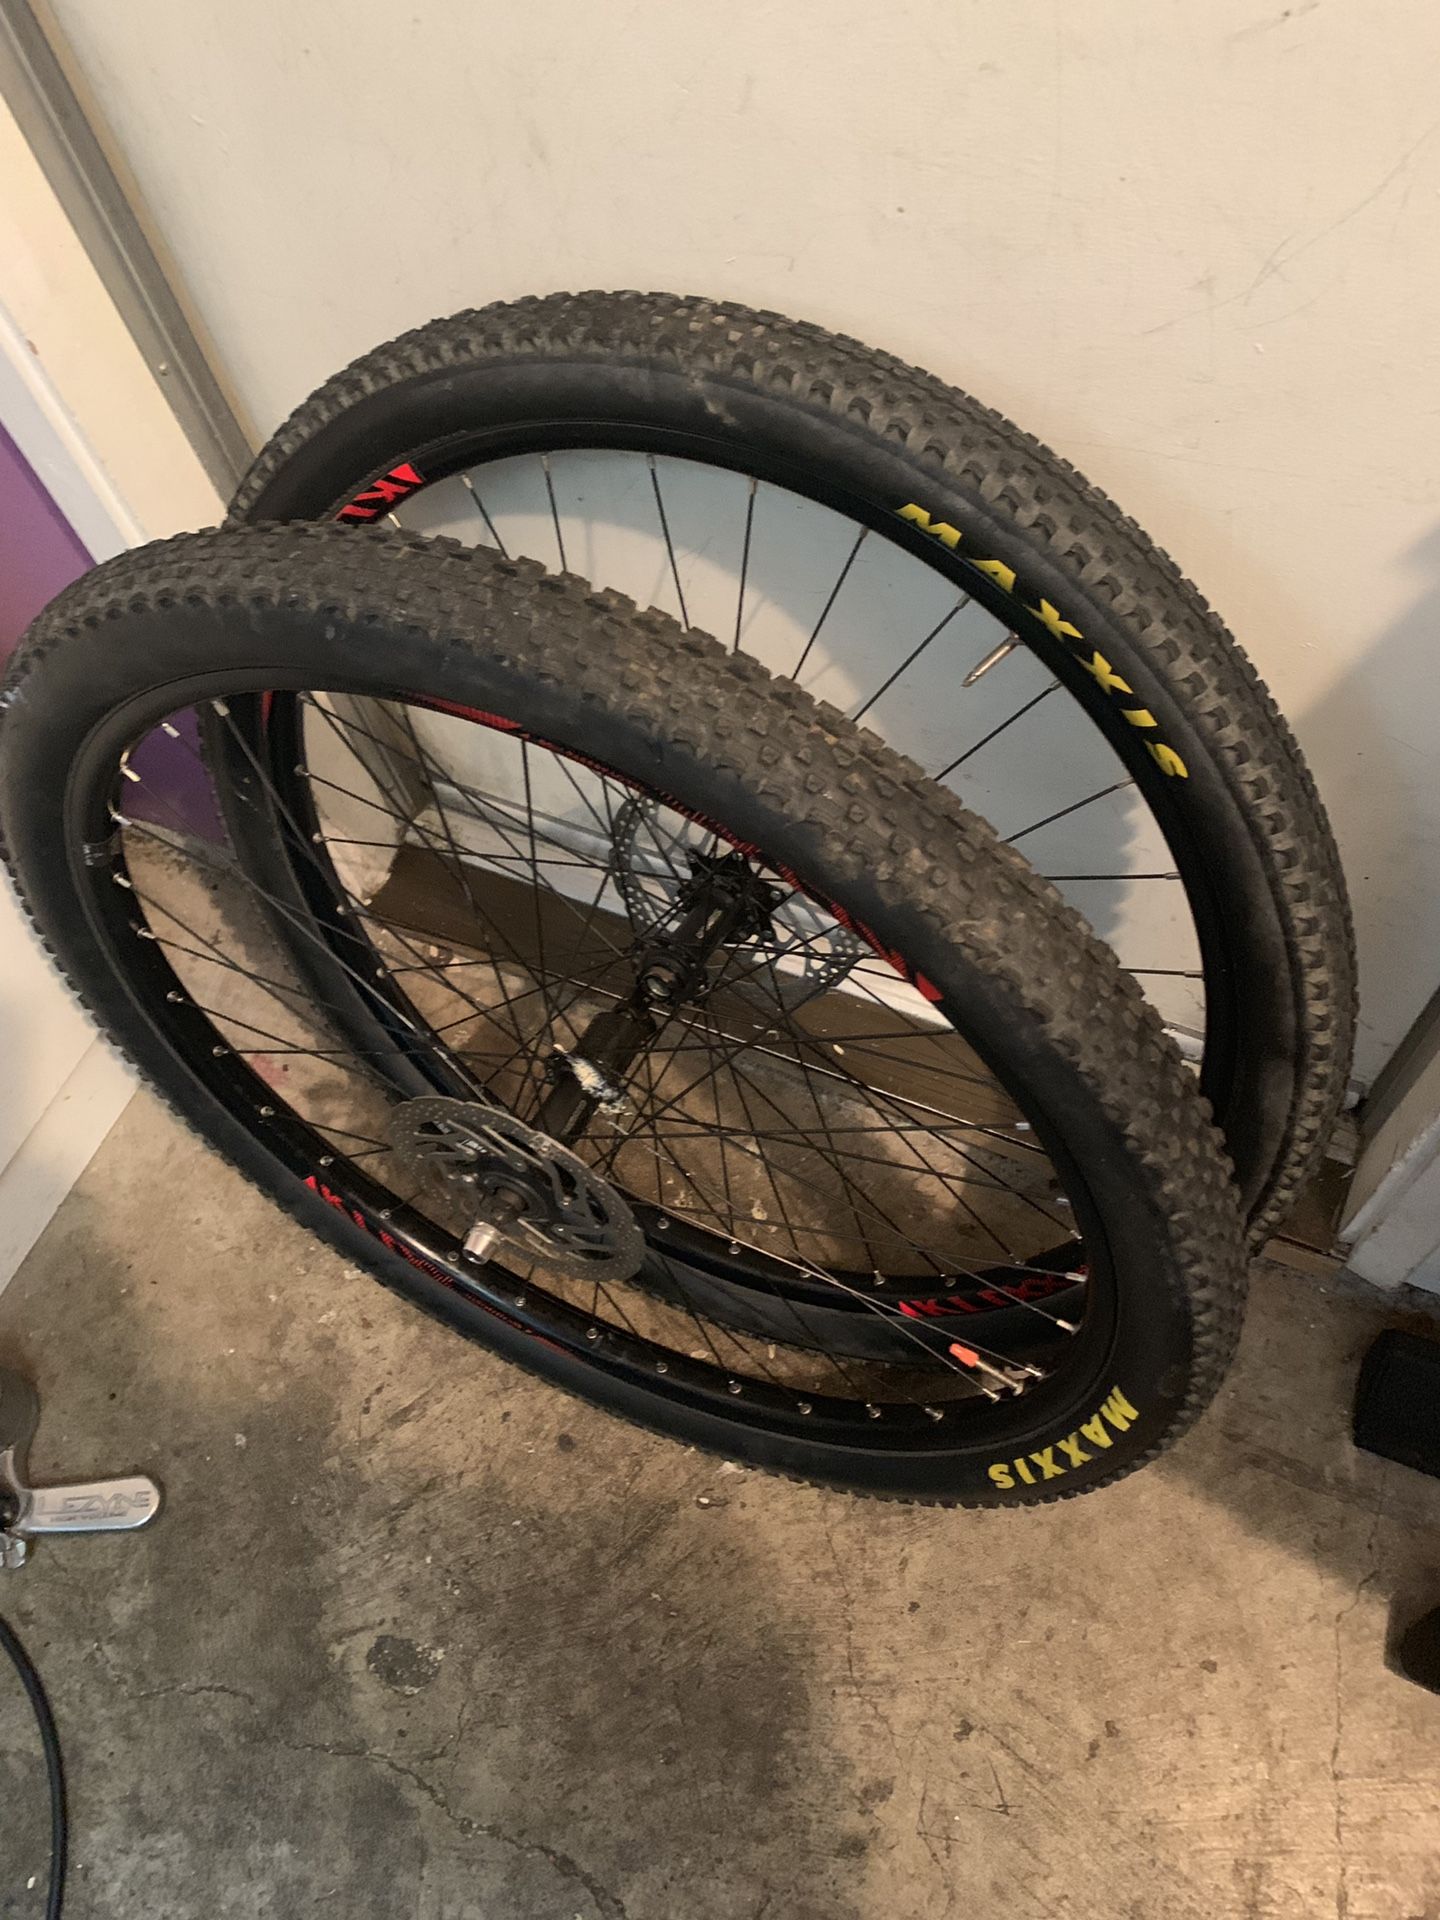 29er mountain bike wheels,tires and rotors